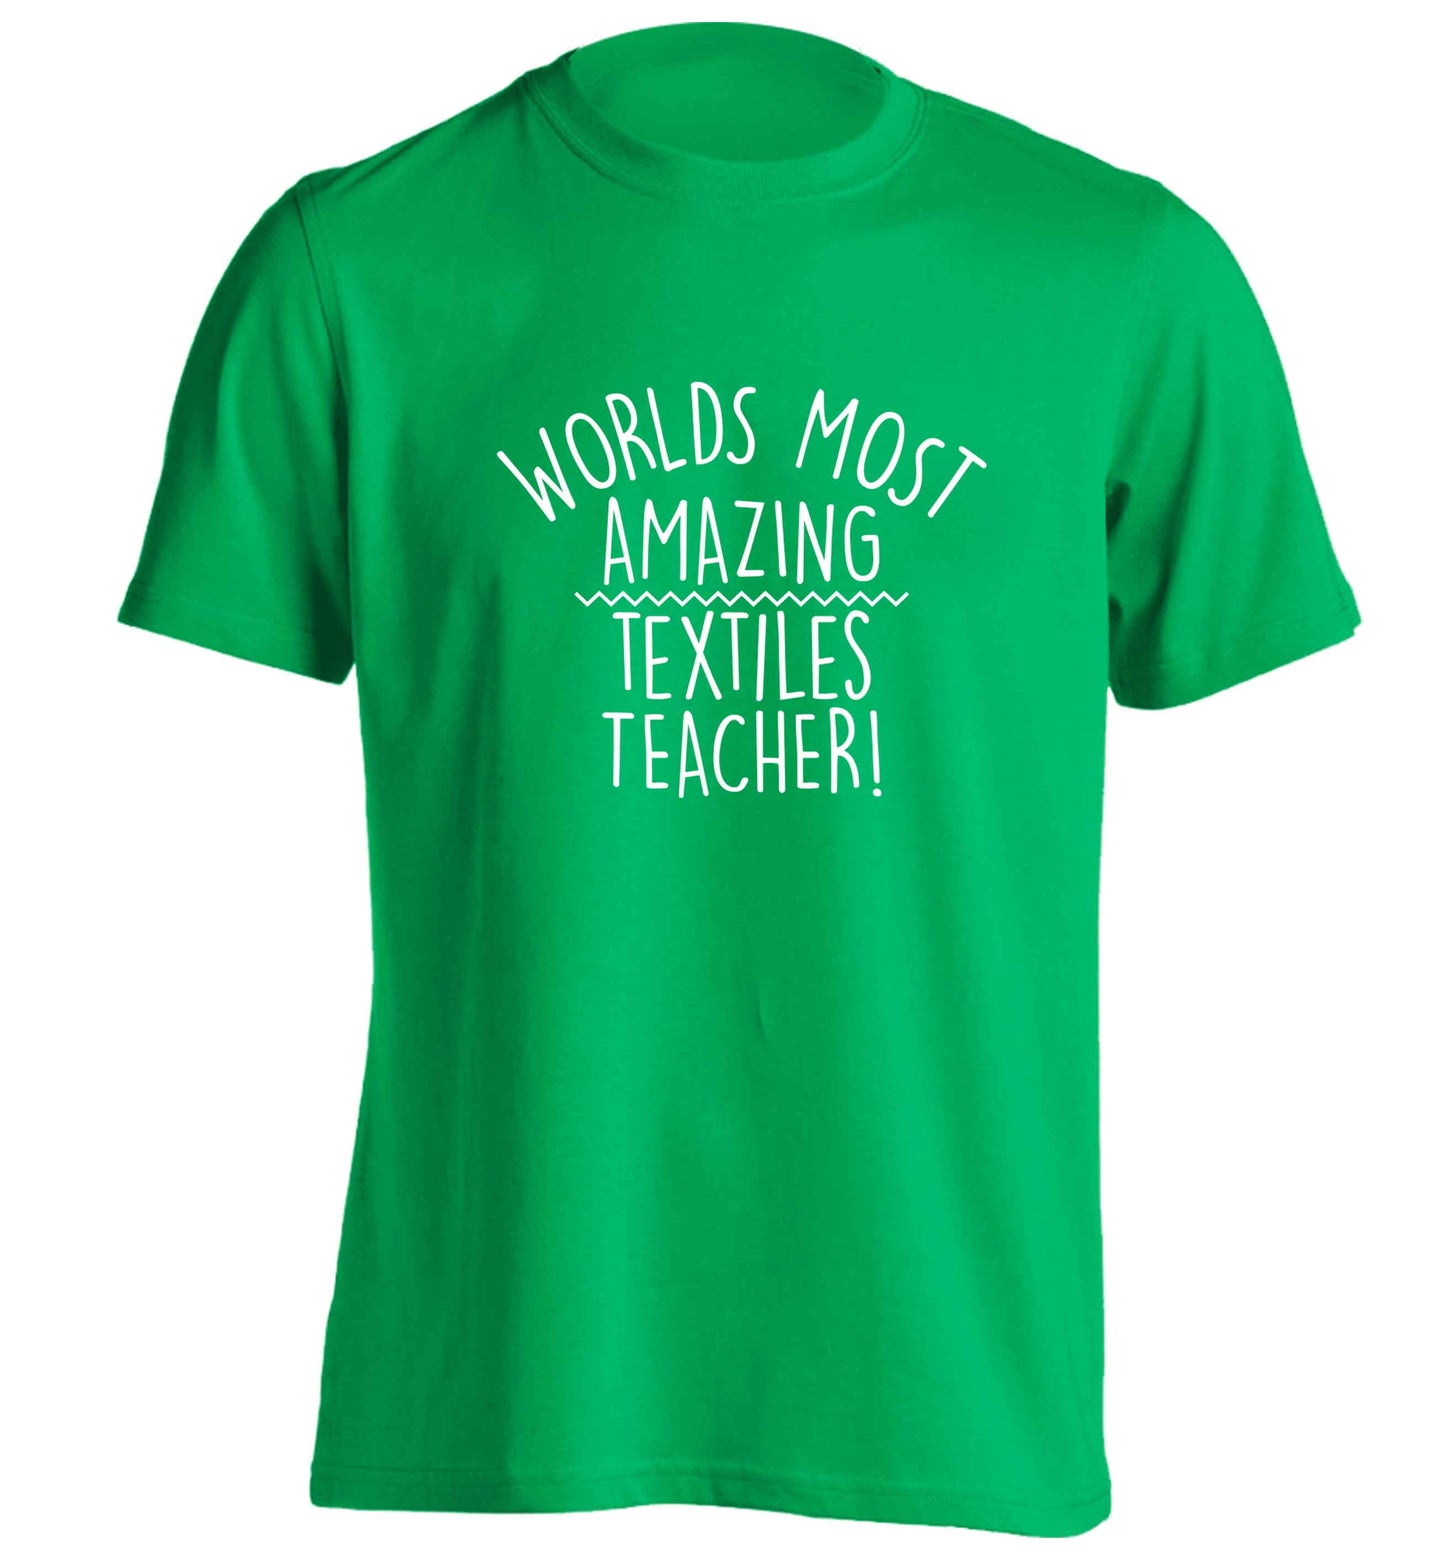 Worlds most amazing textiles teacher adults unisex green Tshirt 2XL